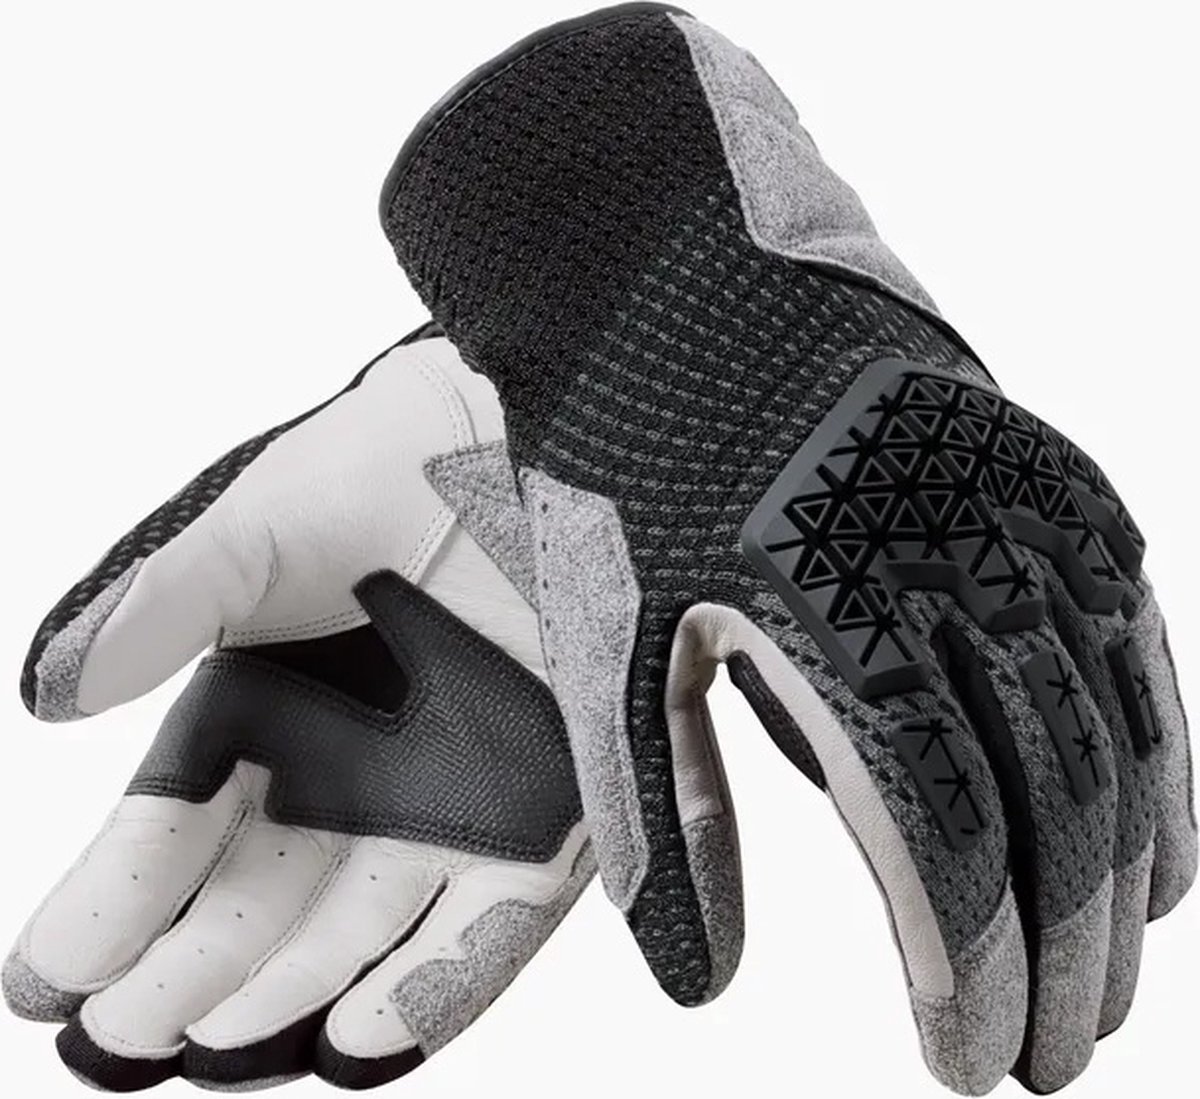 Rev'it! Gloves Offtrack 2 Black Silver 2XL - Maat 2XL - Handschoen